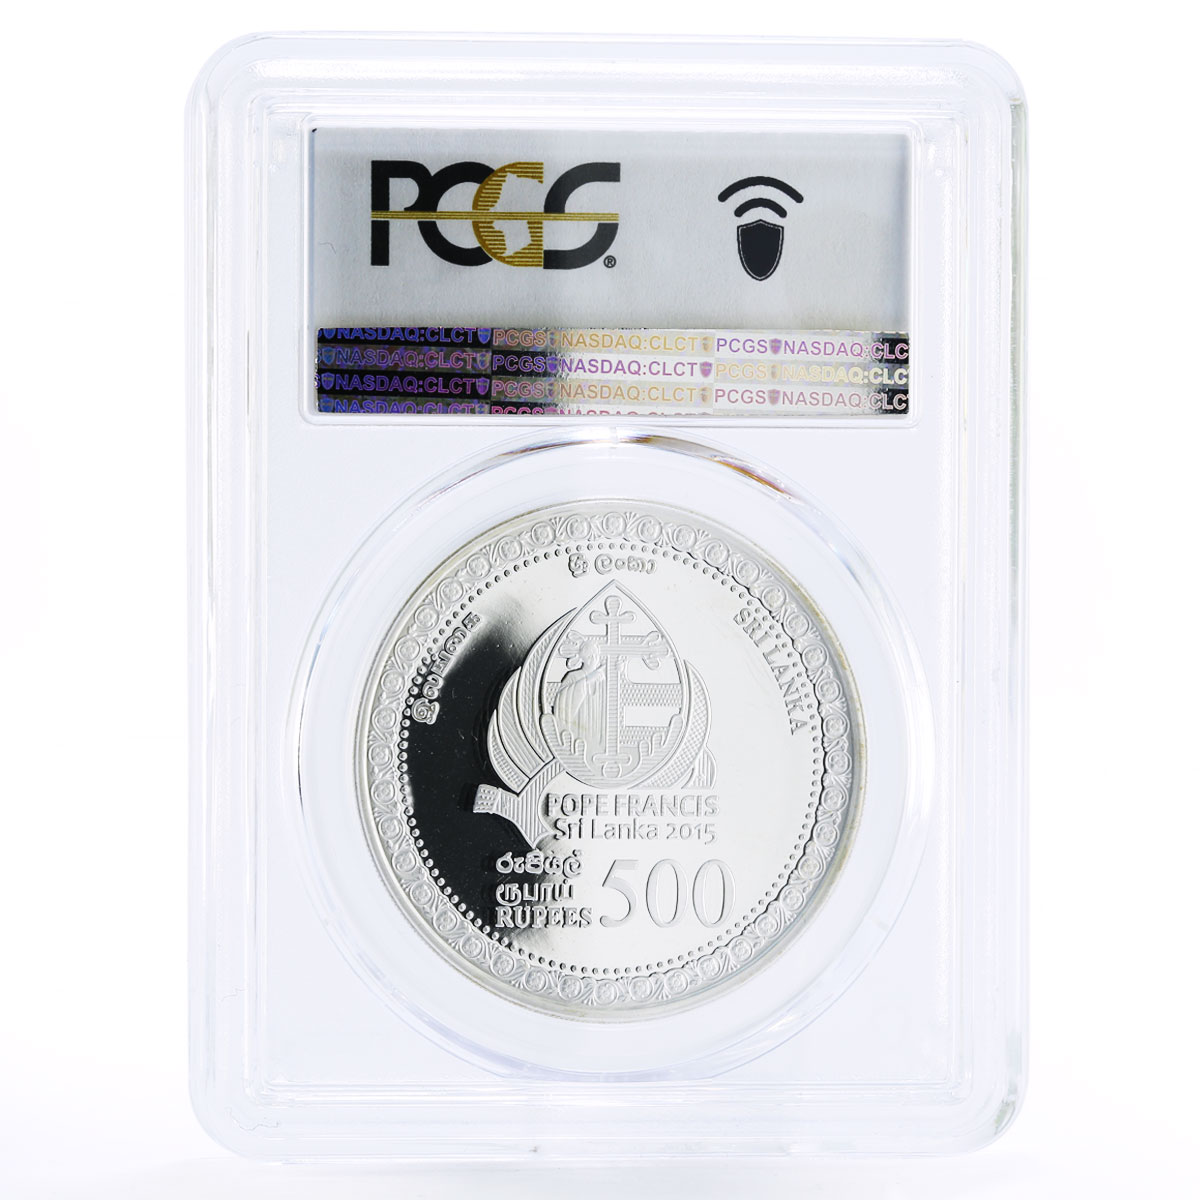 Sri Lanka 500 rupees Pope Francis Visit Roman Church PR69 PCGS silver coin 2015